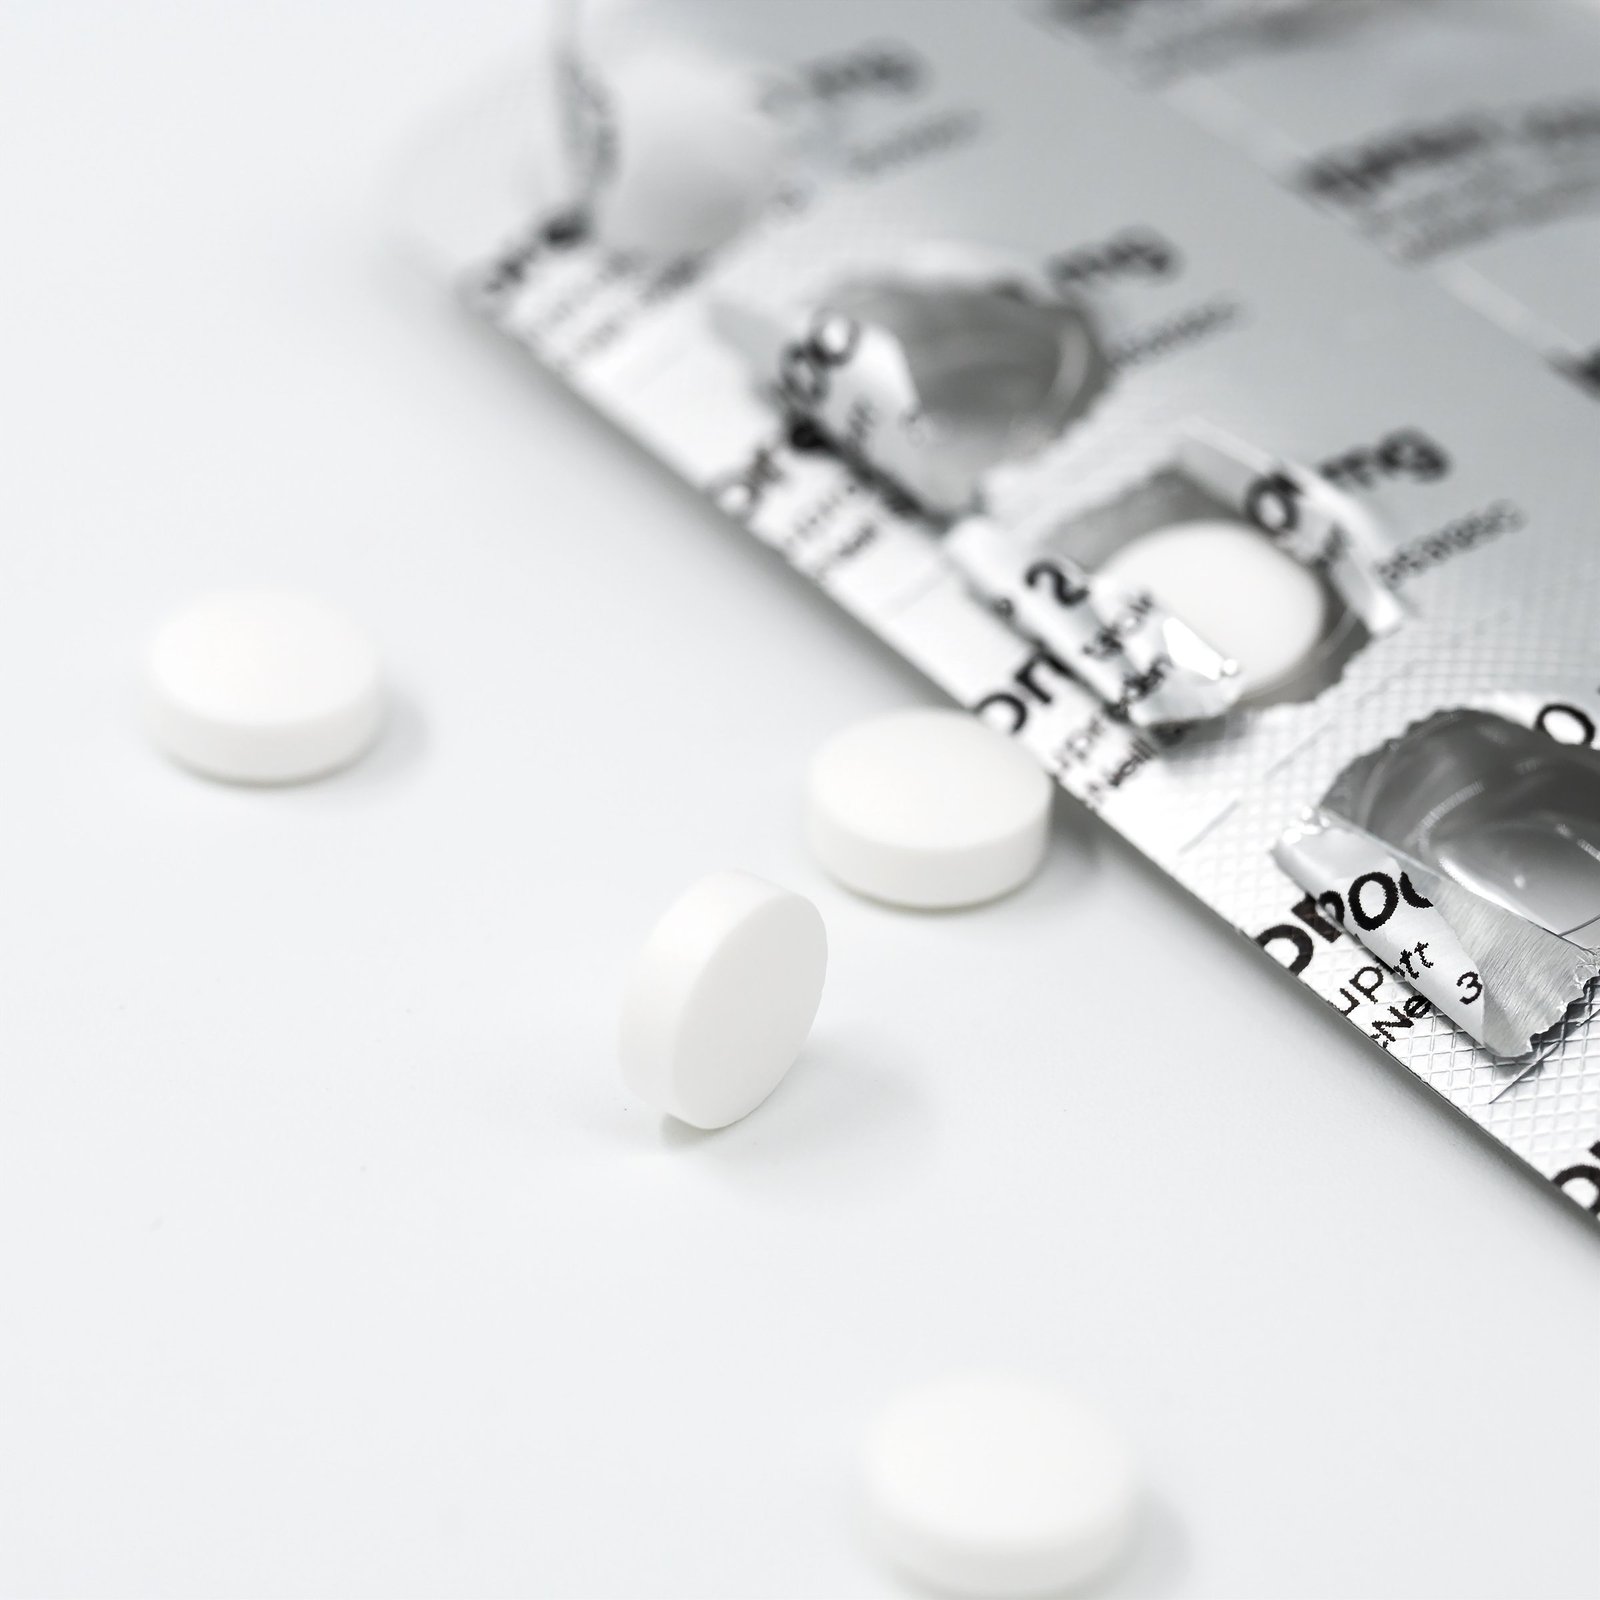 Ipren 200mg Ibuprofen 30 tabletter